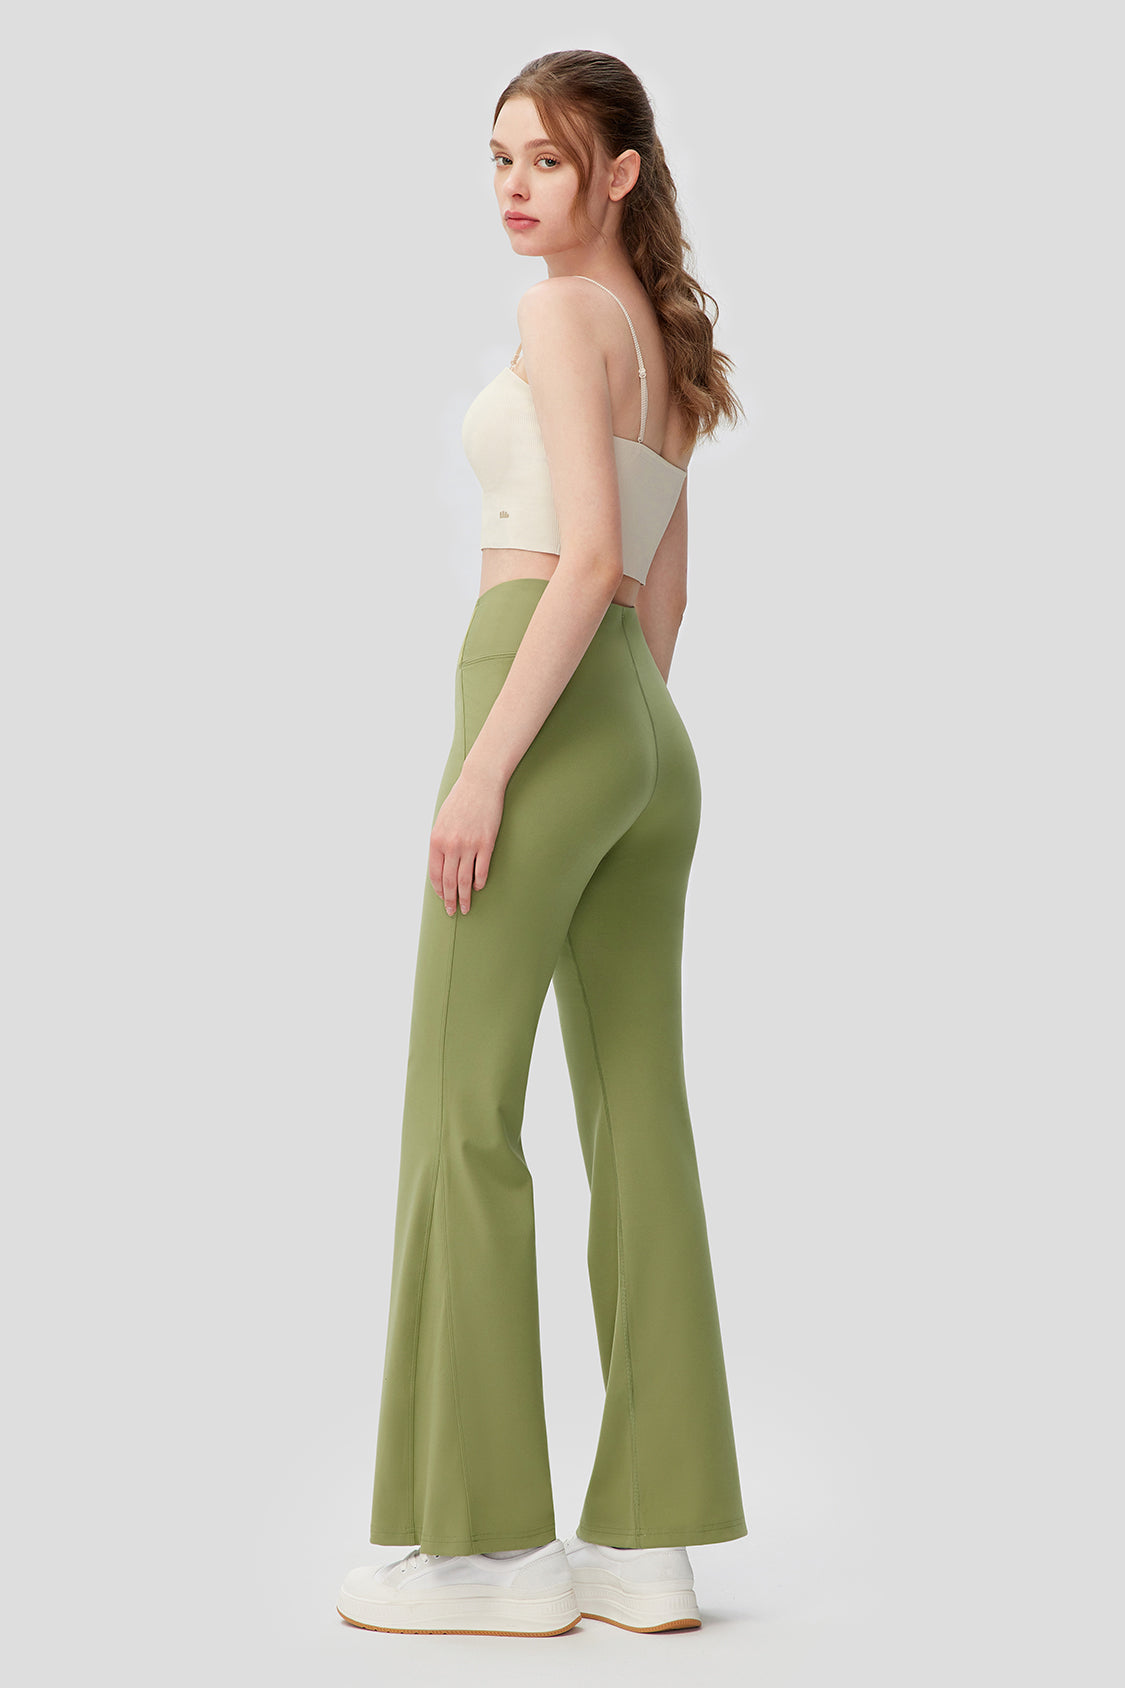 beneunder women's sun protection pants #color_wild meadow green